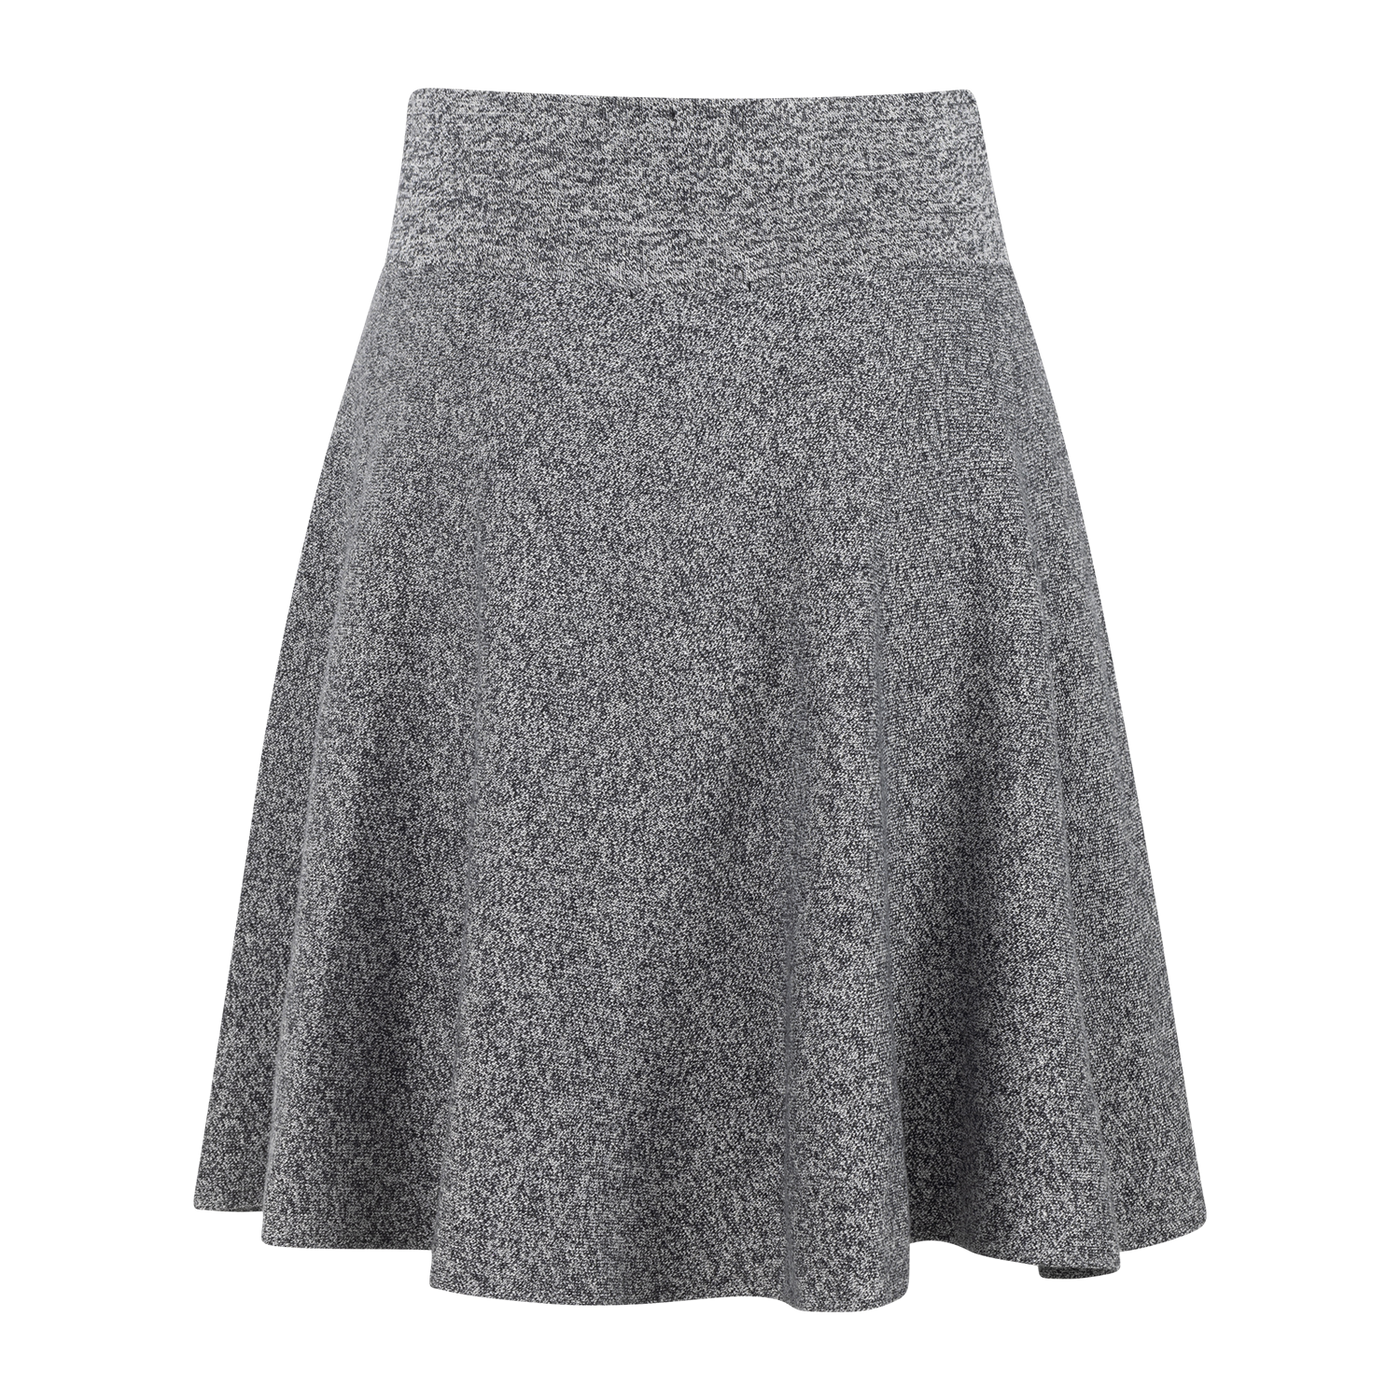 Carina KNITTED Skirt